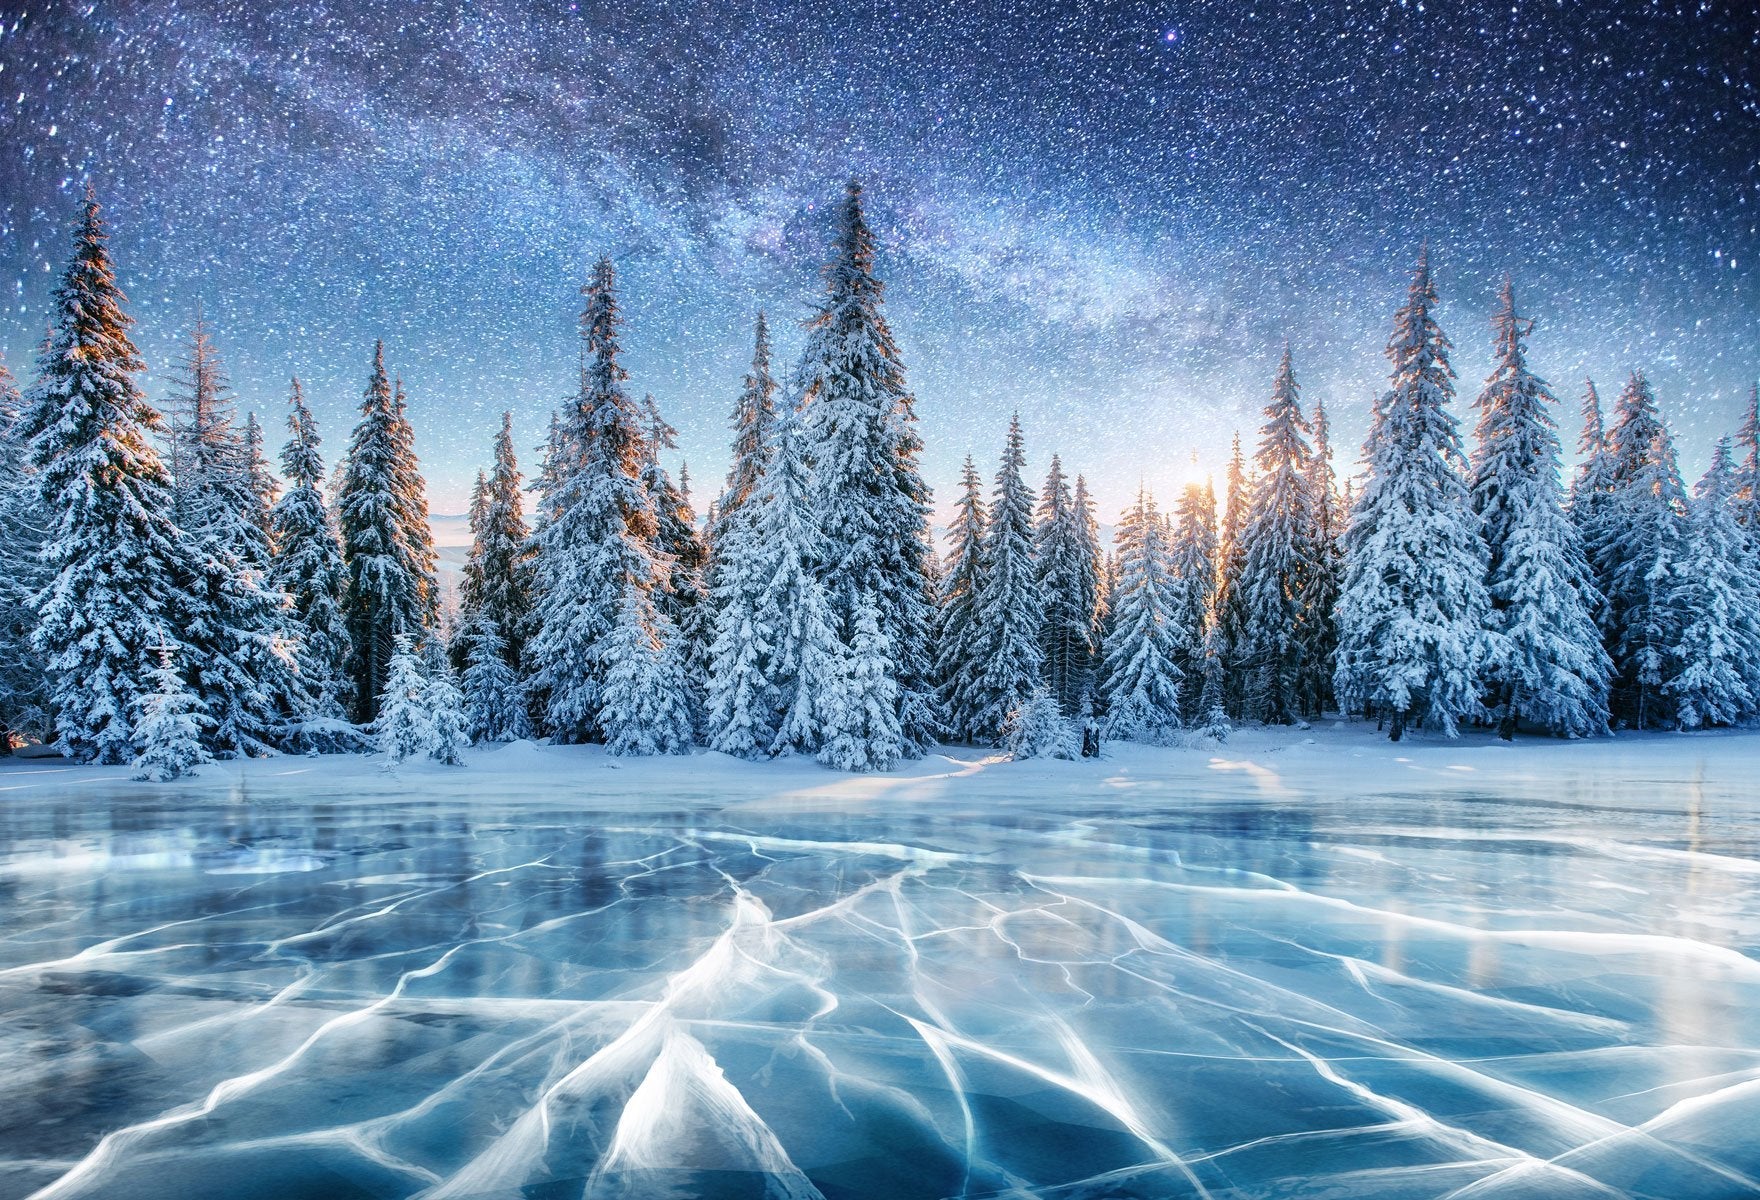 Katebackdrop：Kate Frozen Lake Snowy Forest Star Night Backdrop for Photography